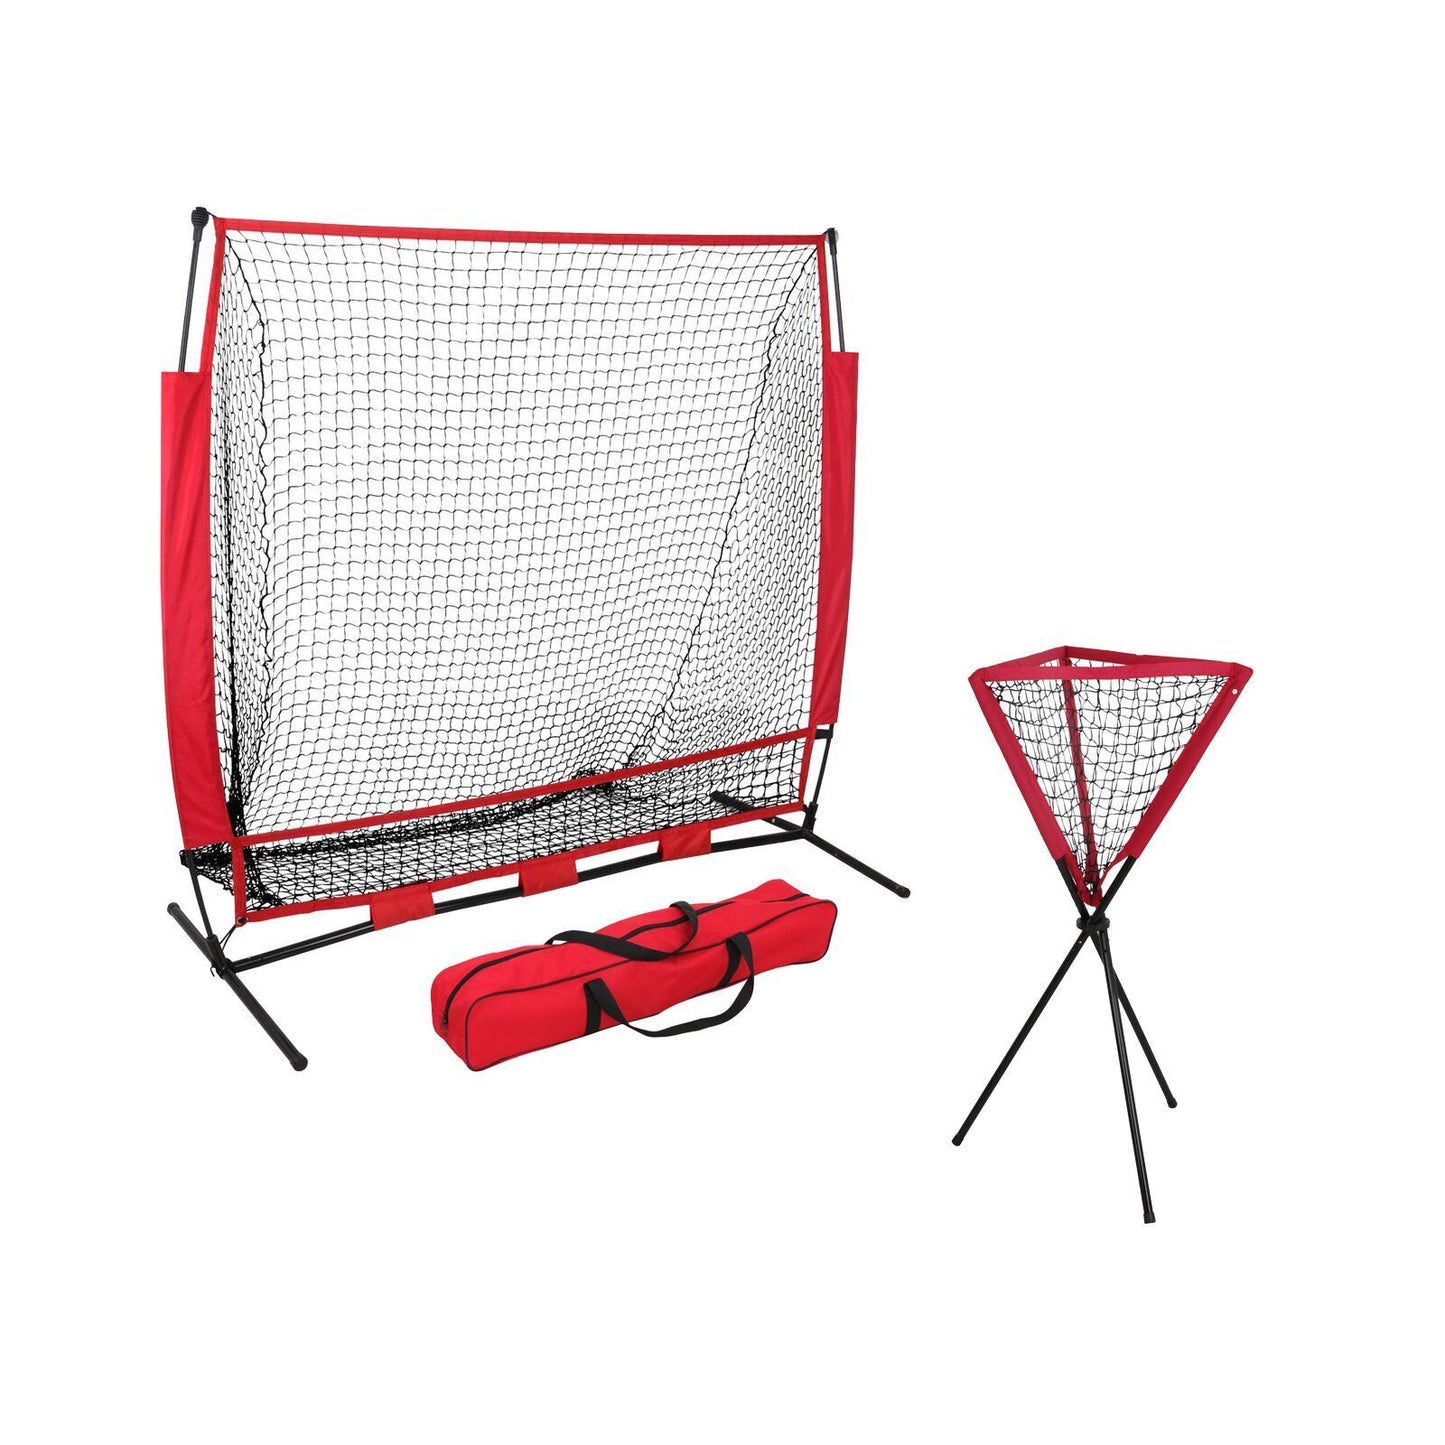 5 x 5' Commercial Grade Portable Baseball Practice Net + Tripod Stand Ball Caddy